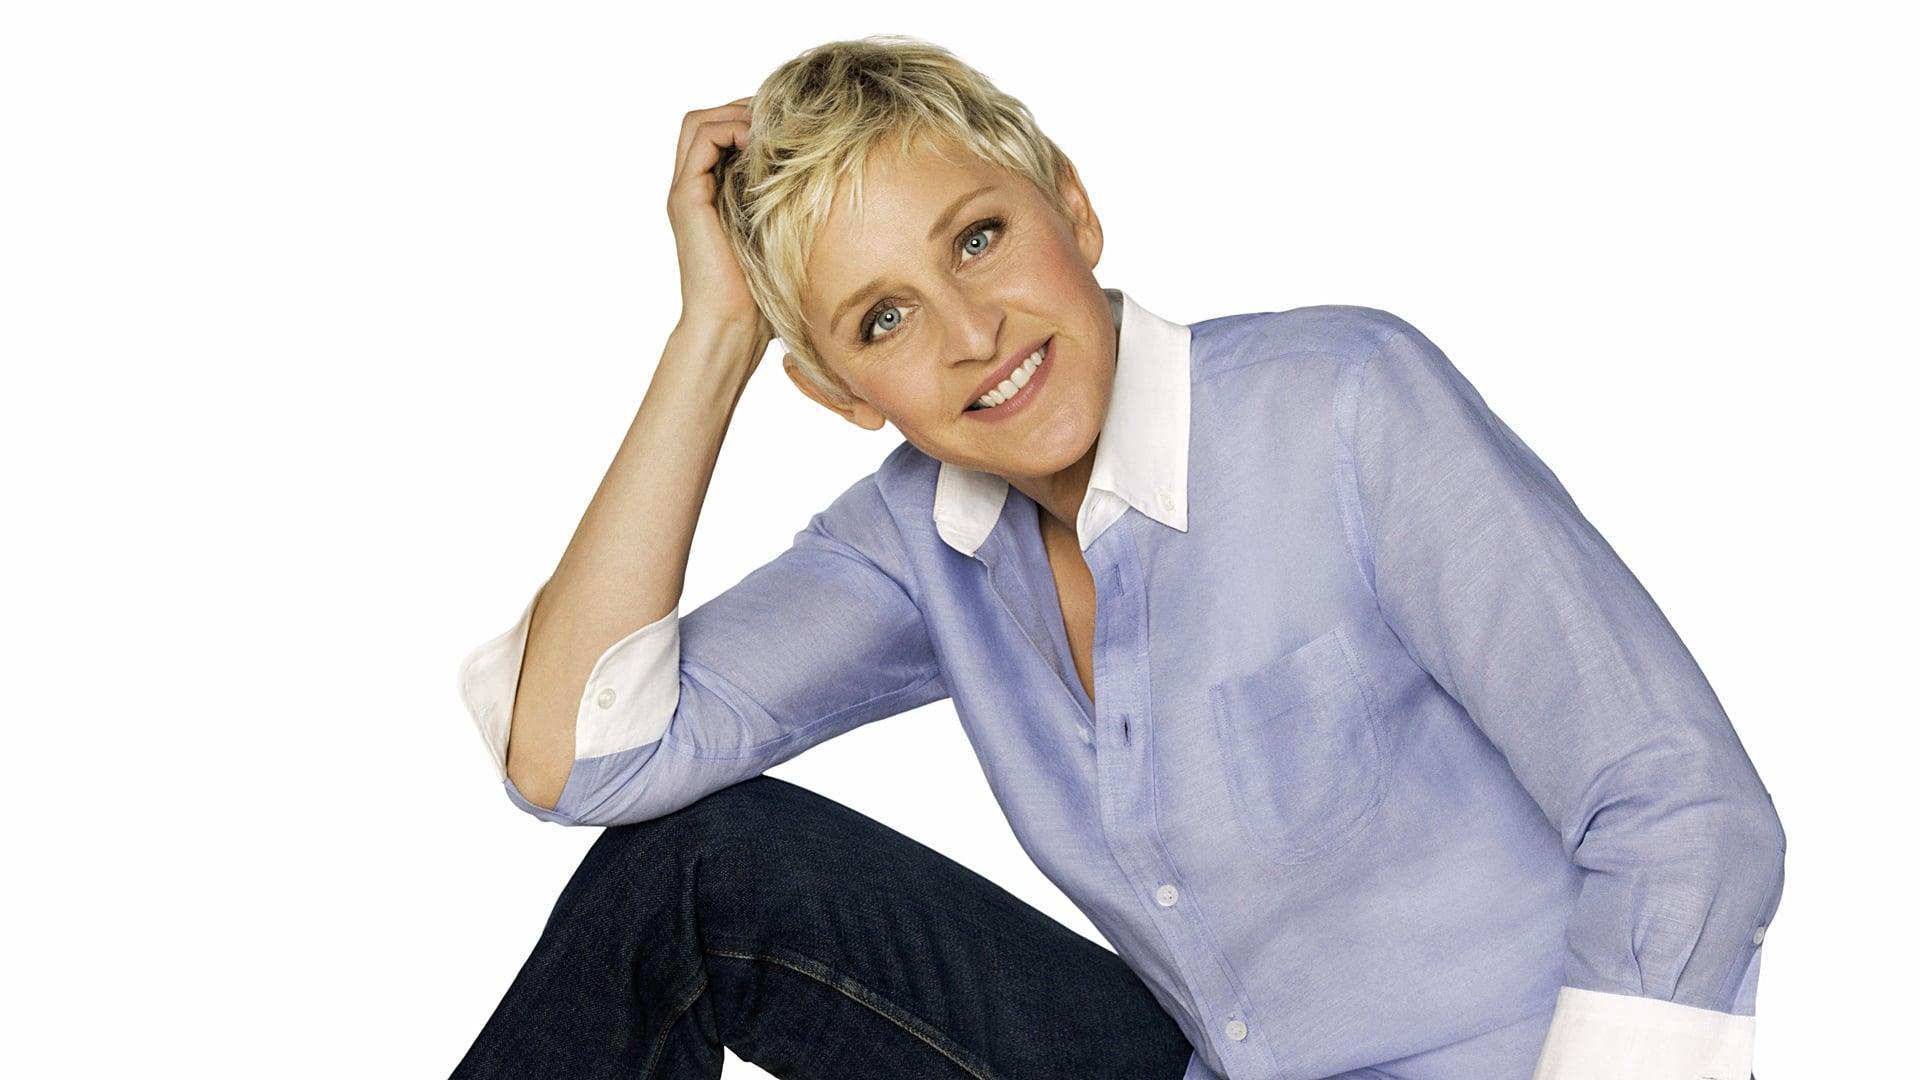 The Ellen DeGeneres Show backdrop